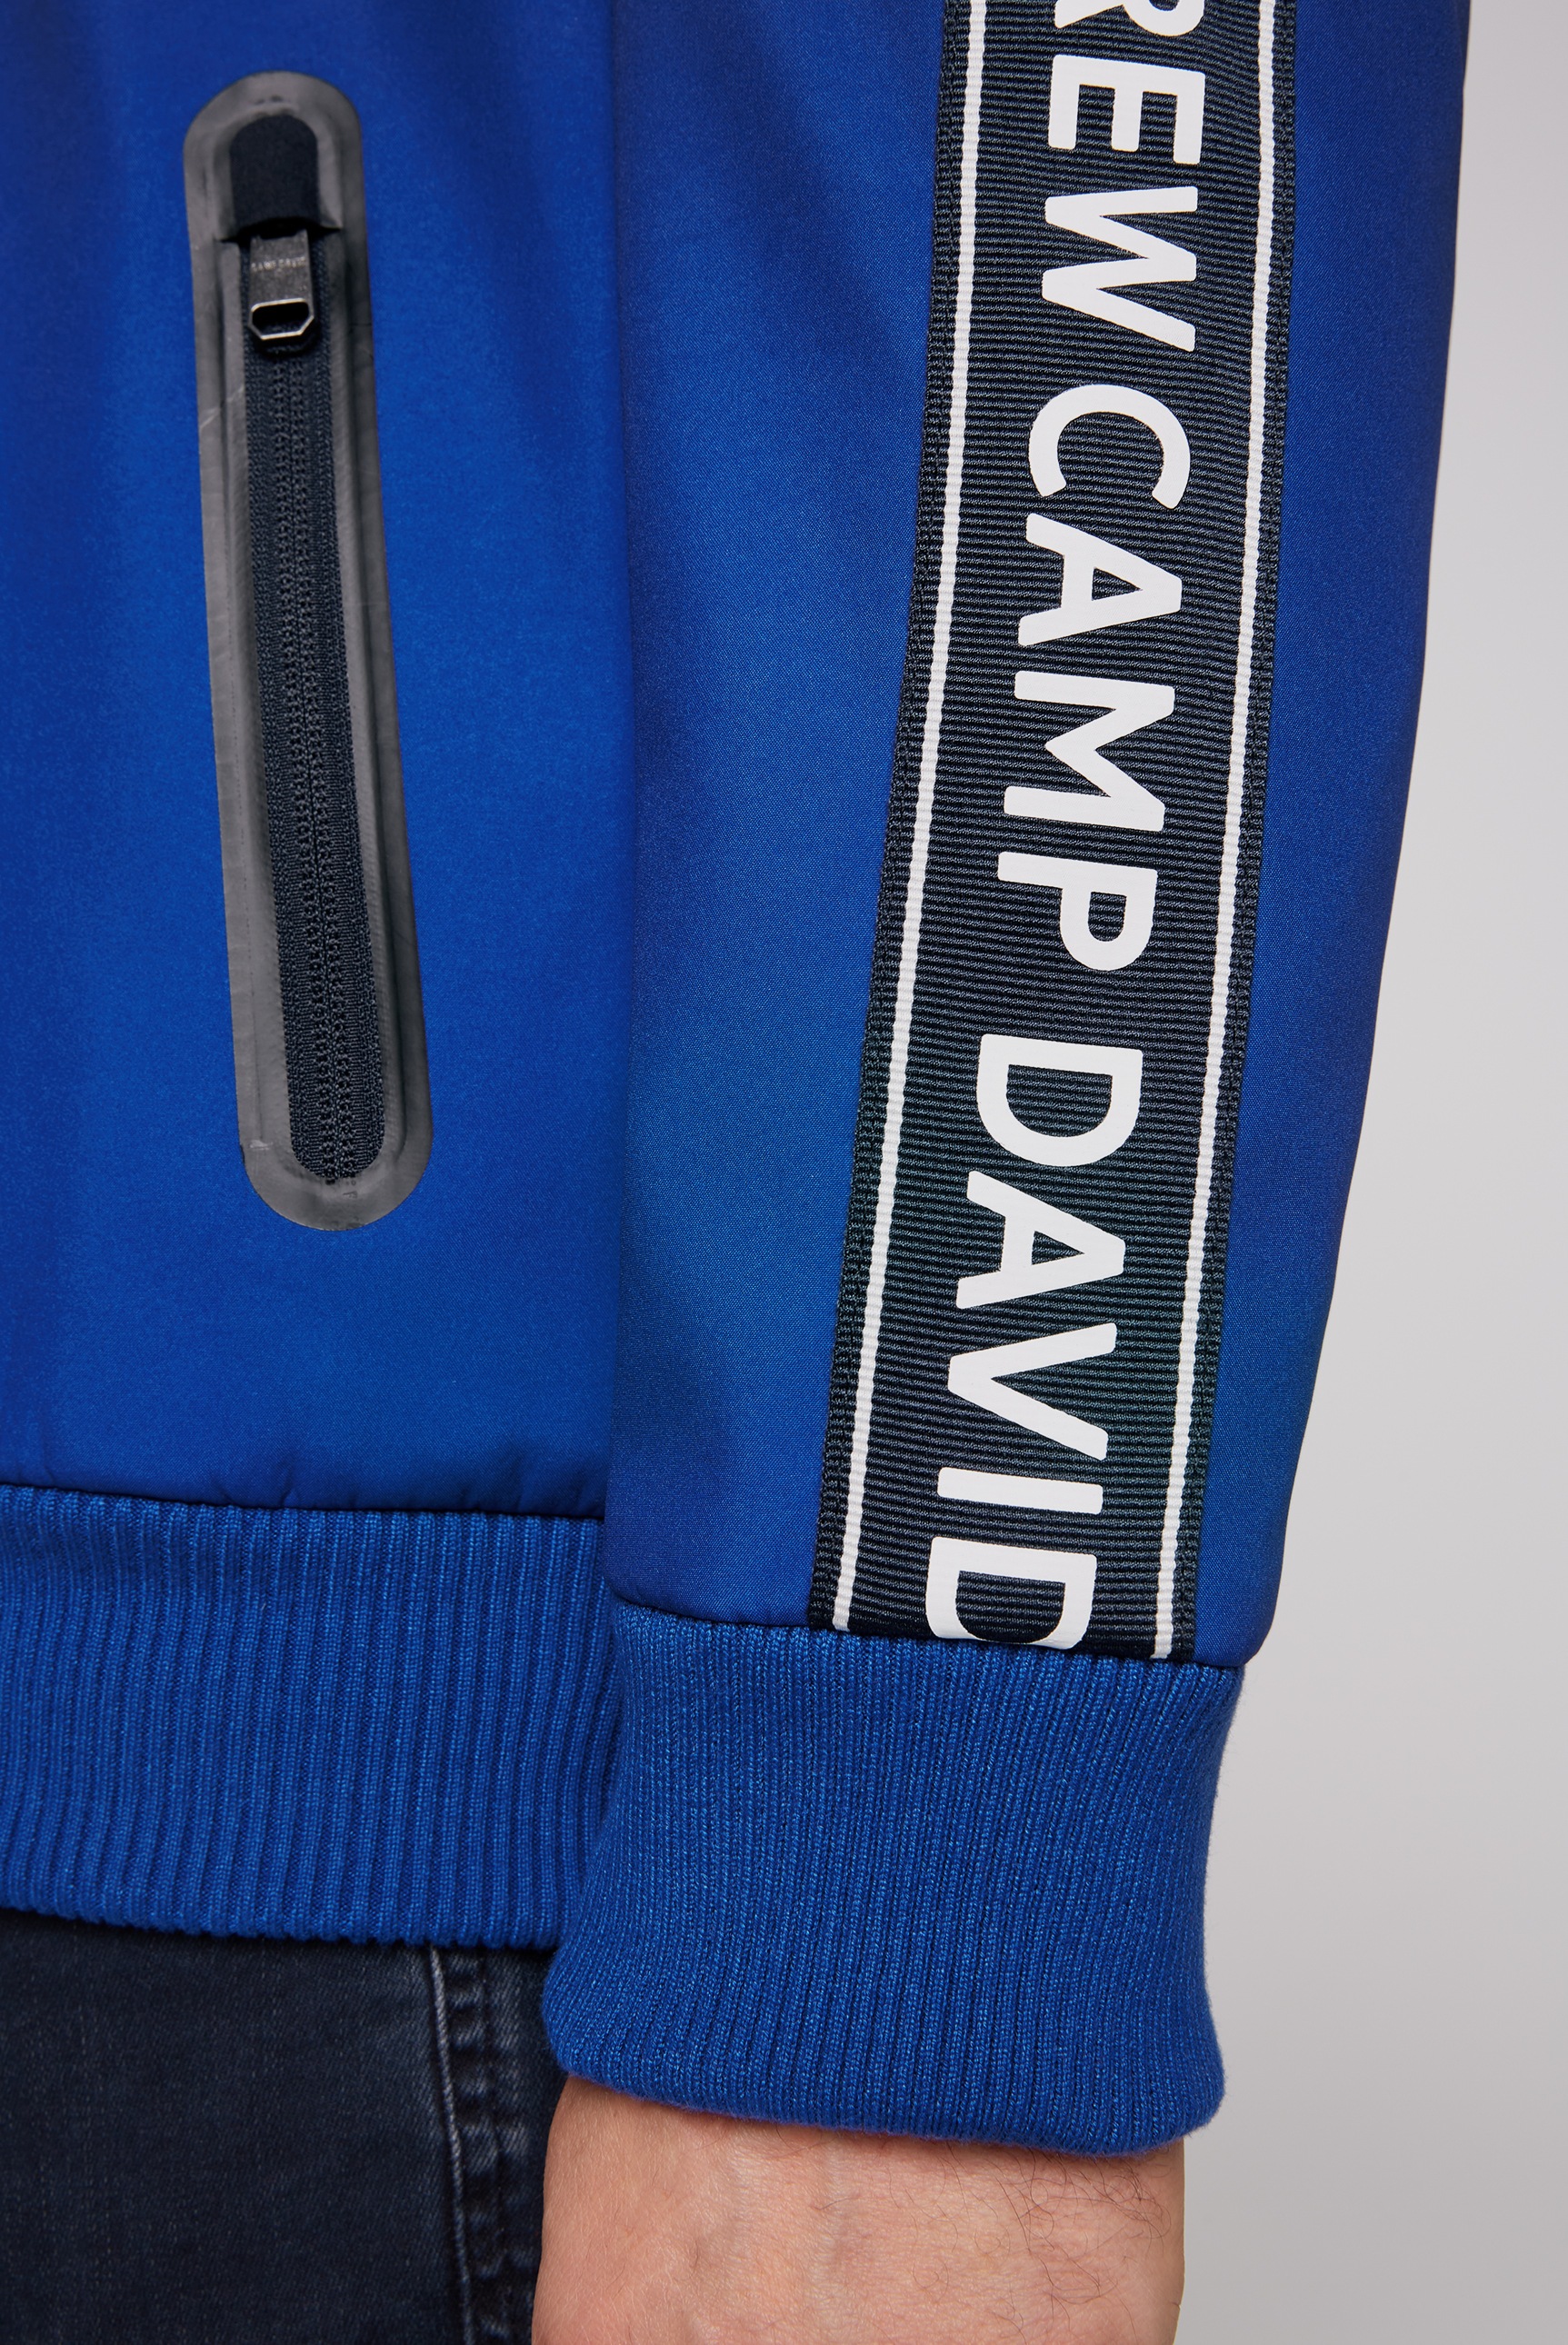 CAMP DAVID Softshelljacke, ohne Kapuze, mit Applikationen